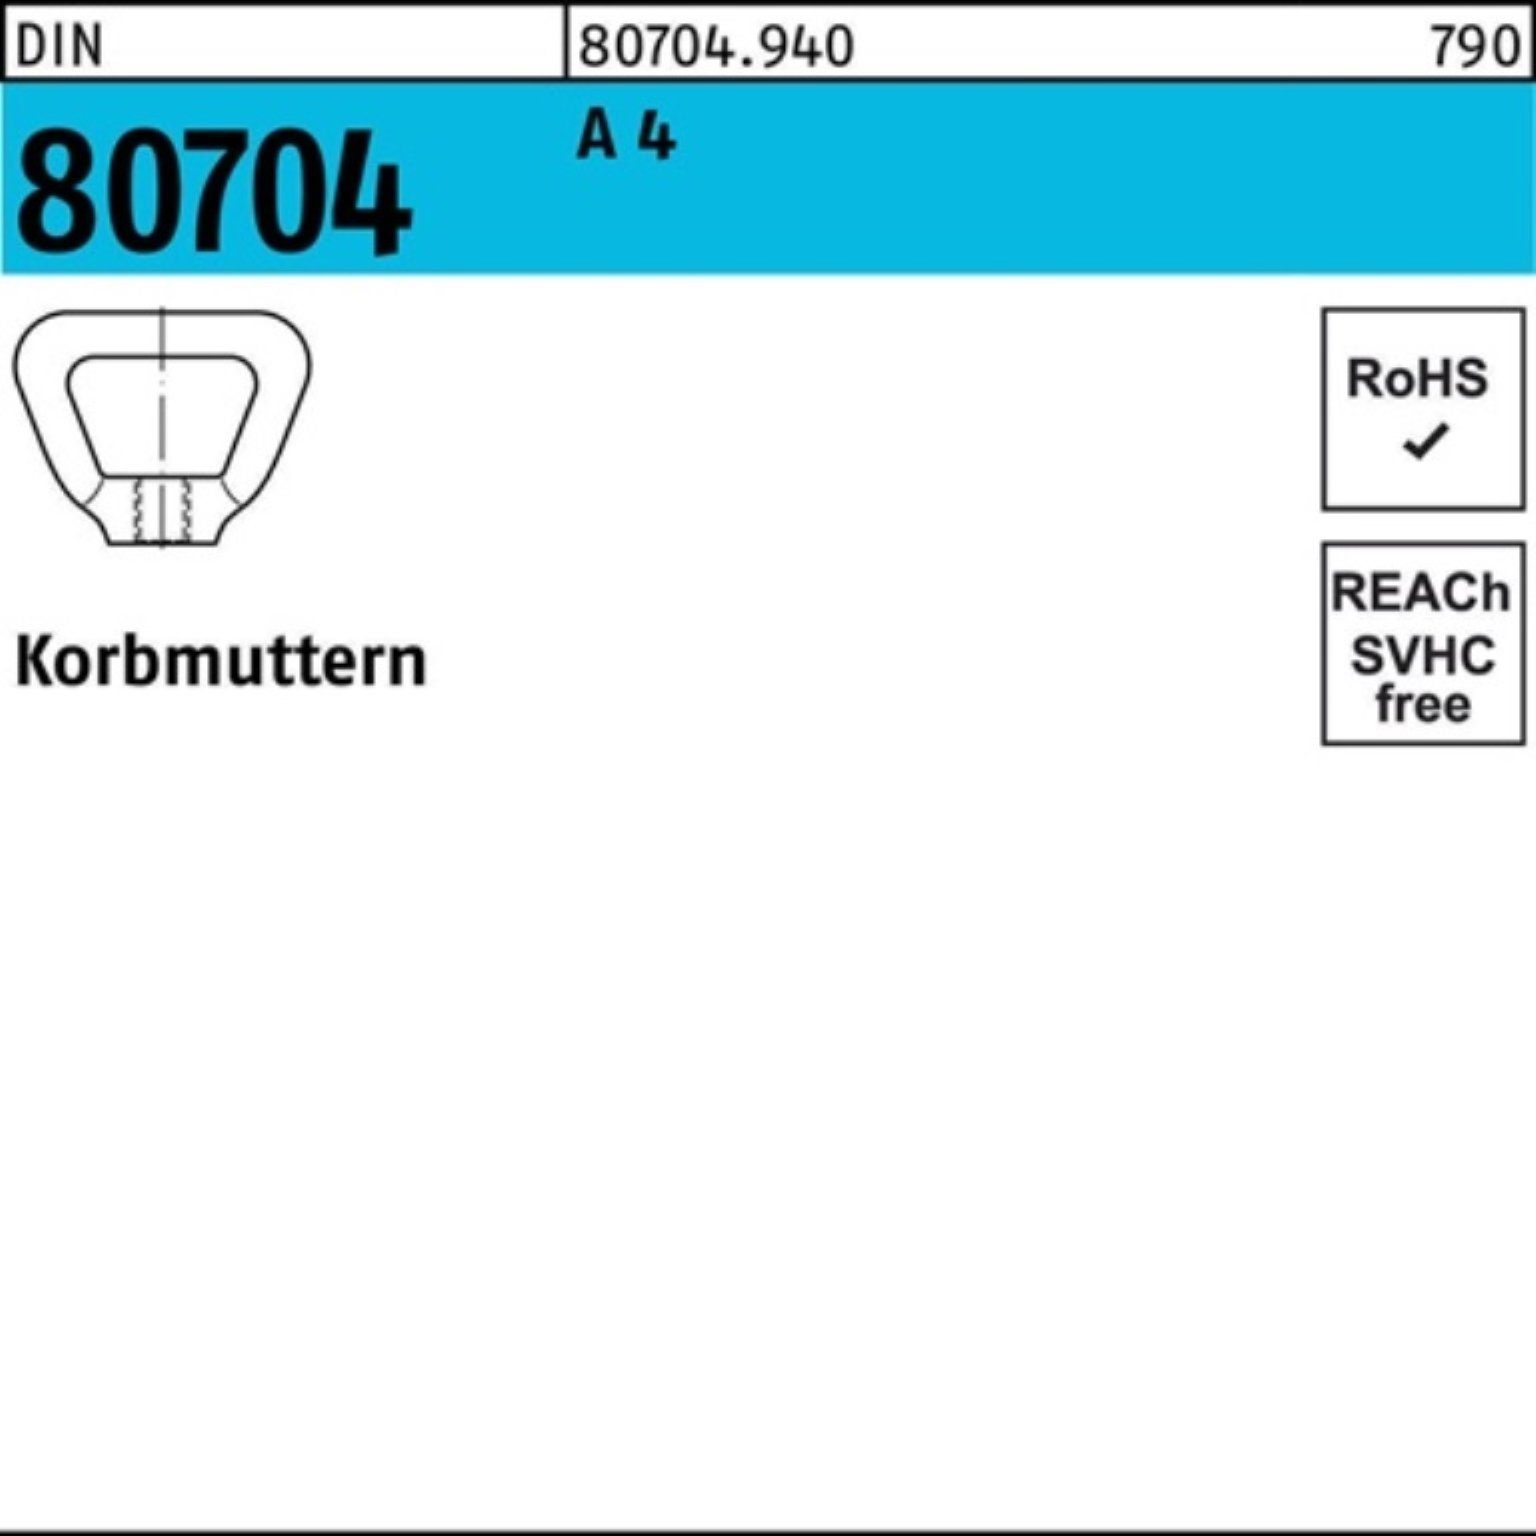 Reyher Korbmutter 100er Pack Korbmutter DIN 80704 M10 A 4 1 Stück DIN 80704 A 4 Korbmut